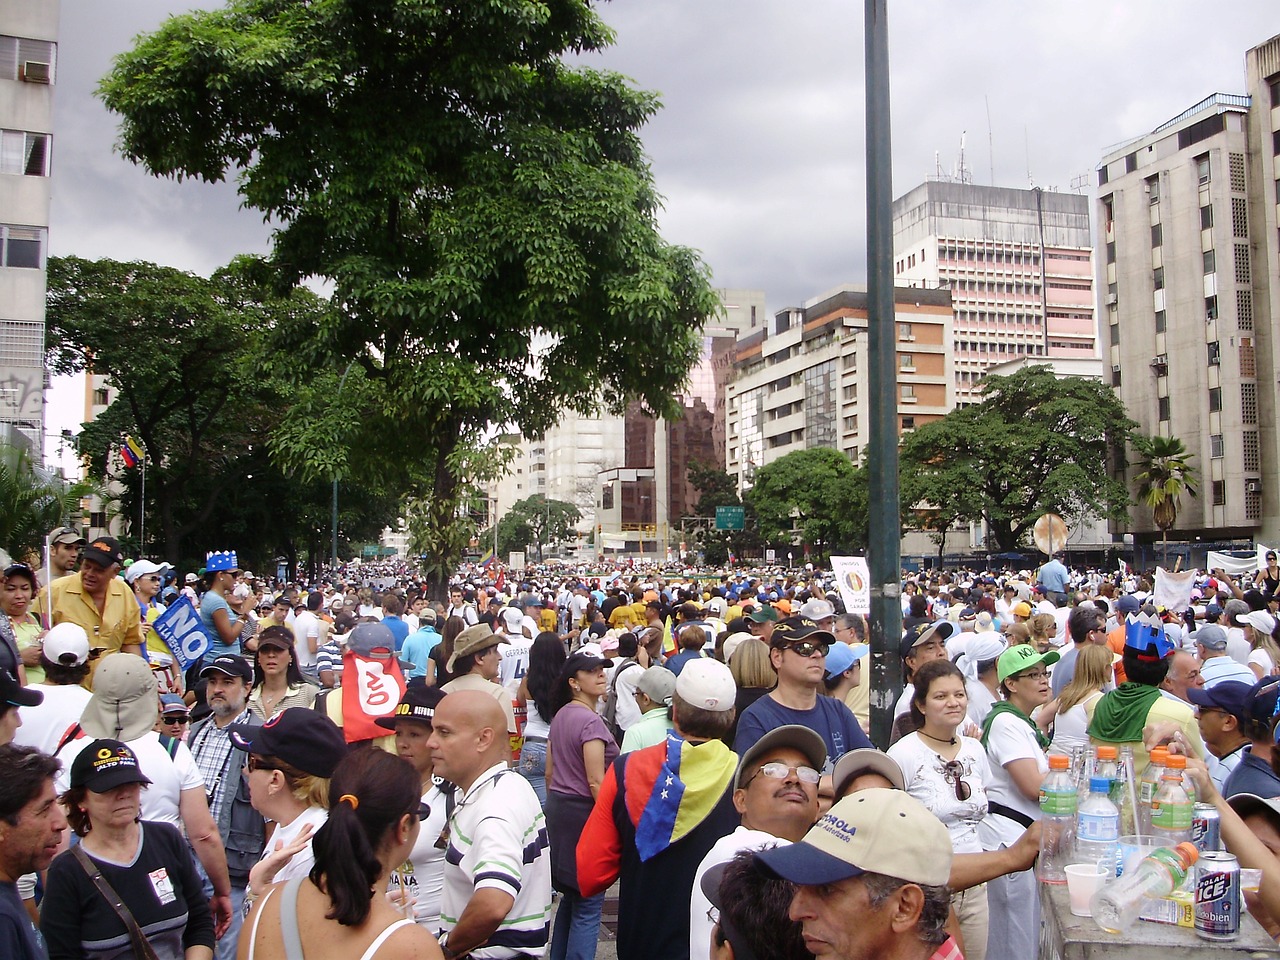 marches protests venezuela free photo